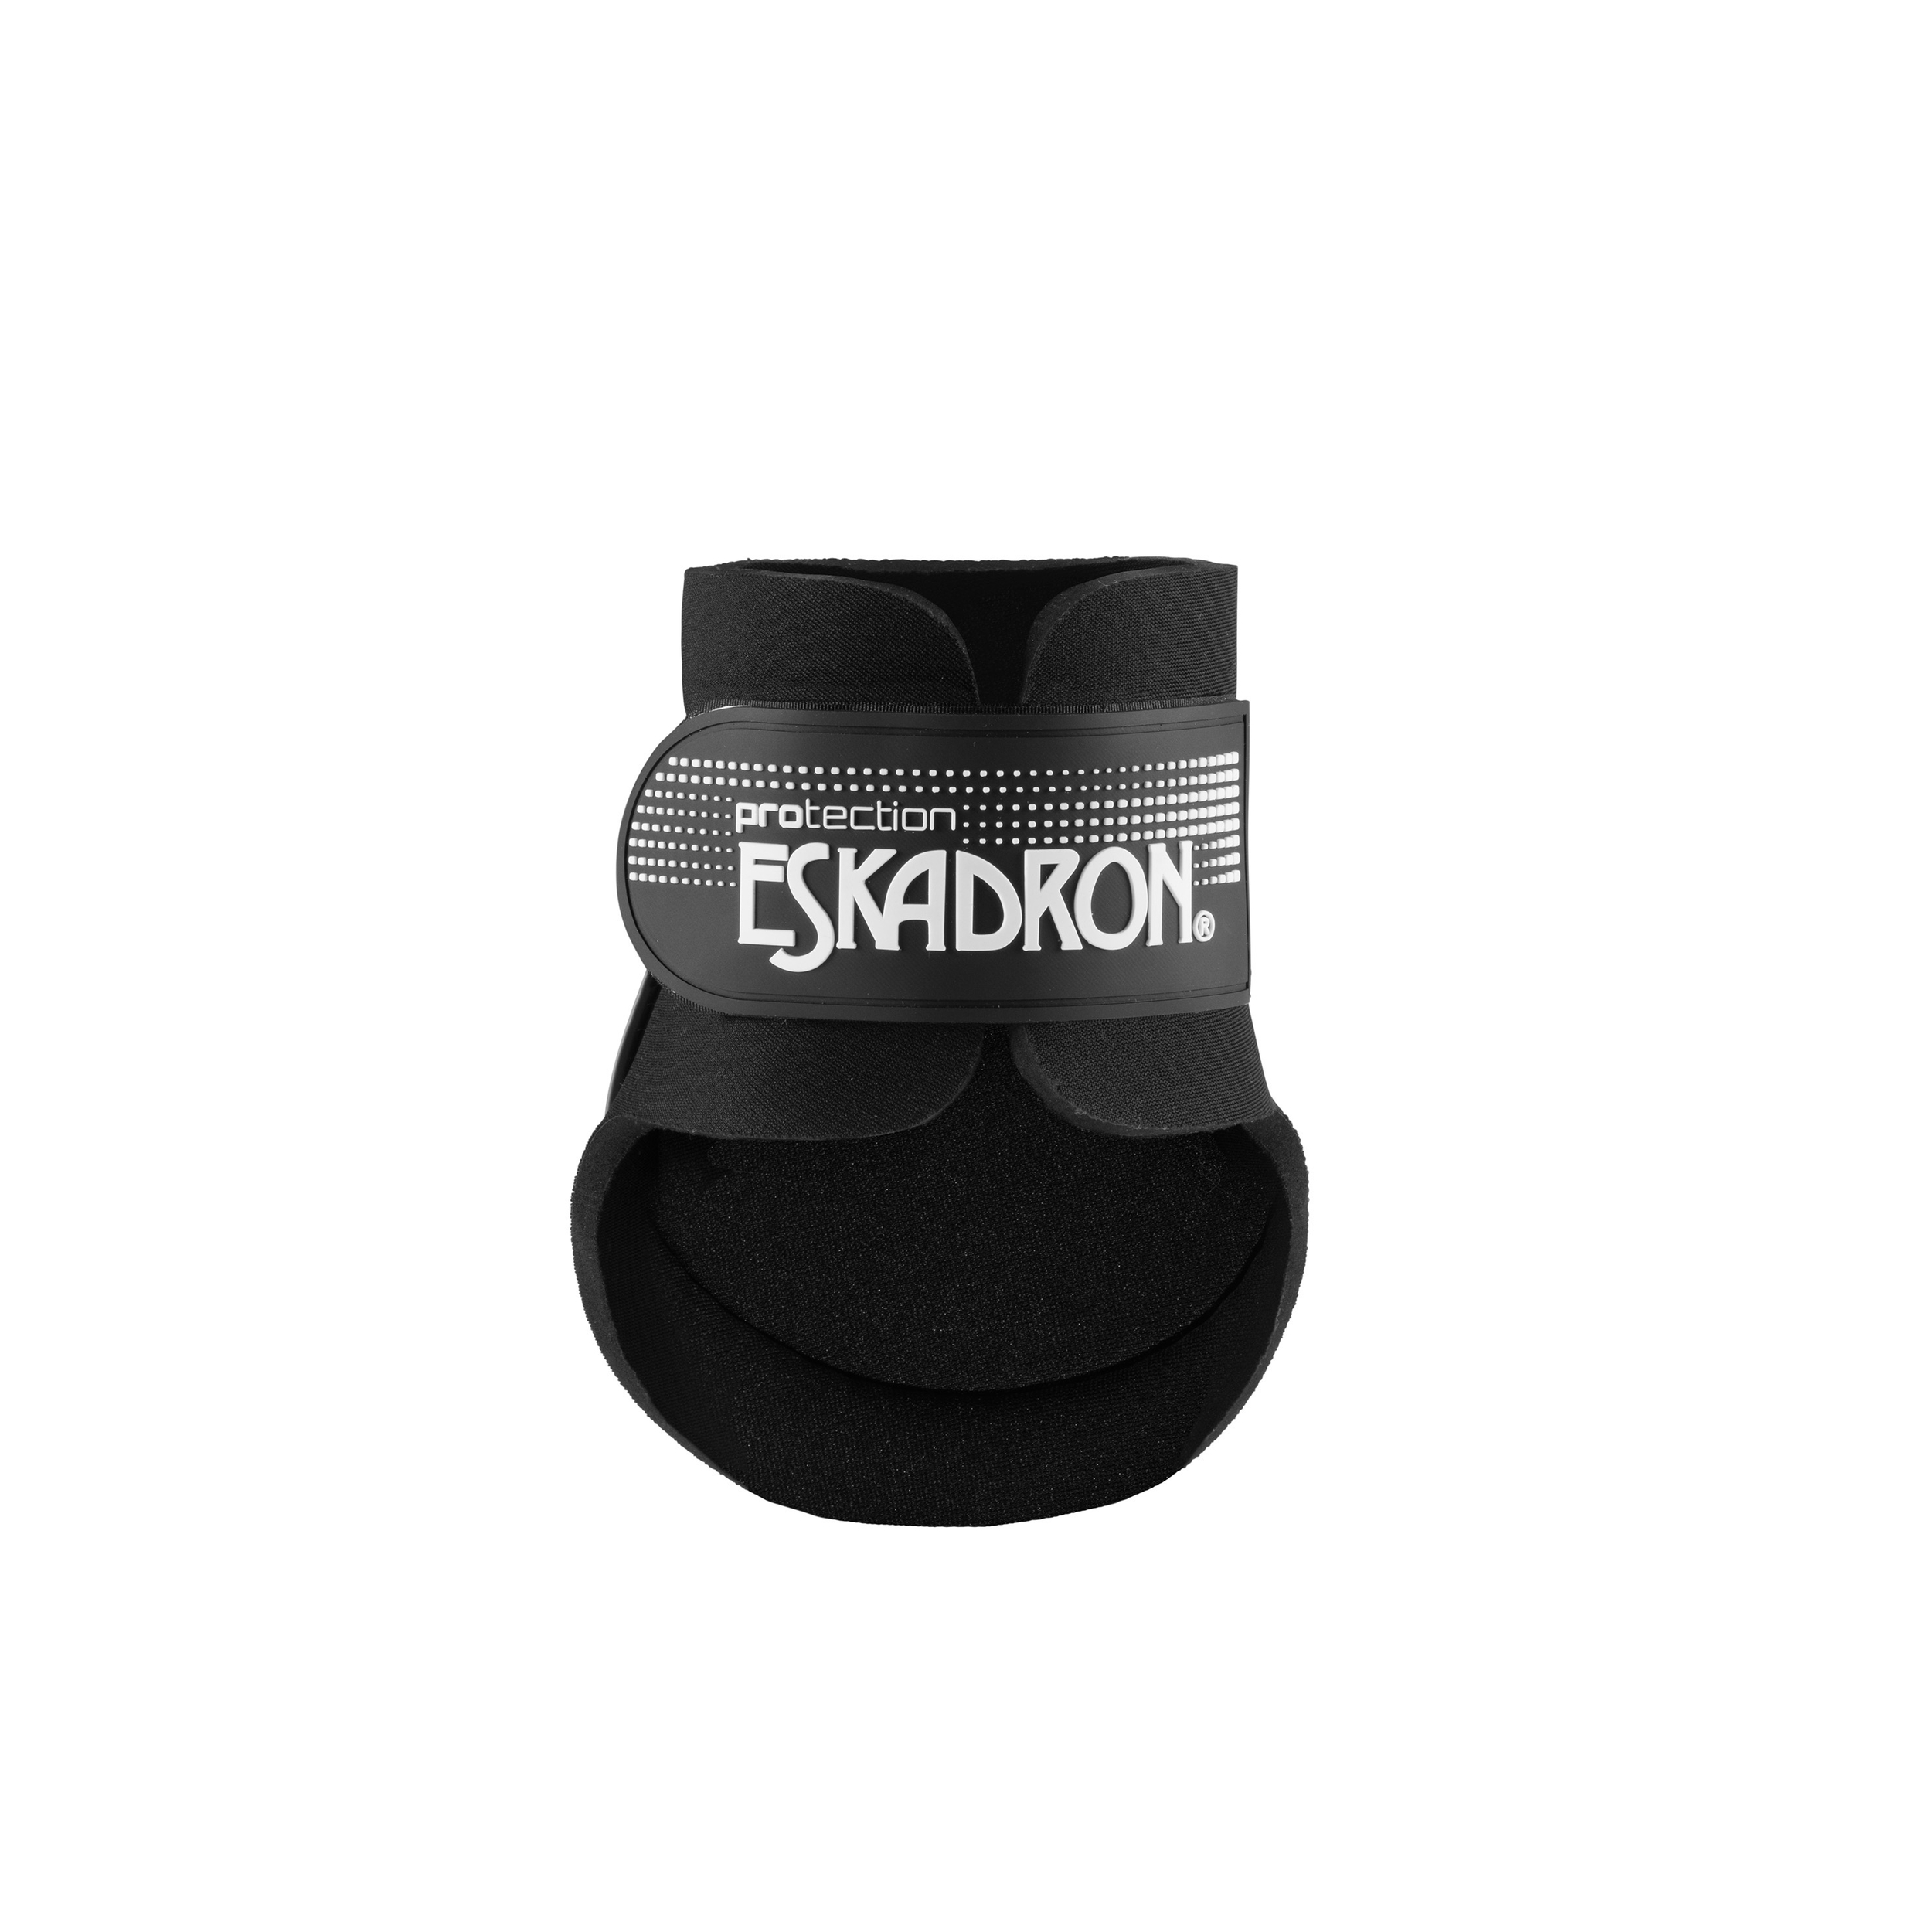 ESKADRON Basics Streichkappen Protection hinten - steel gray - WB - 8